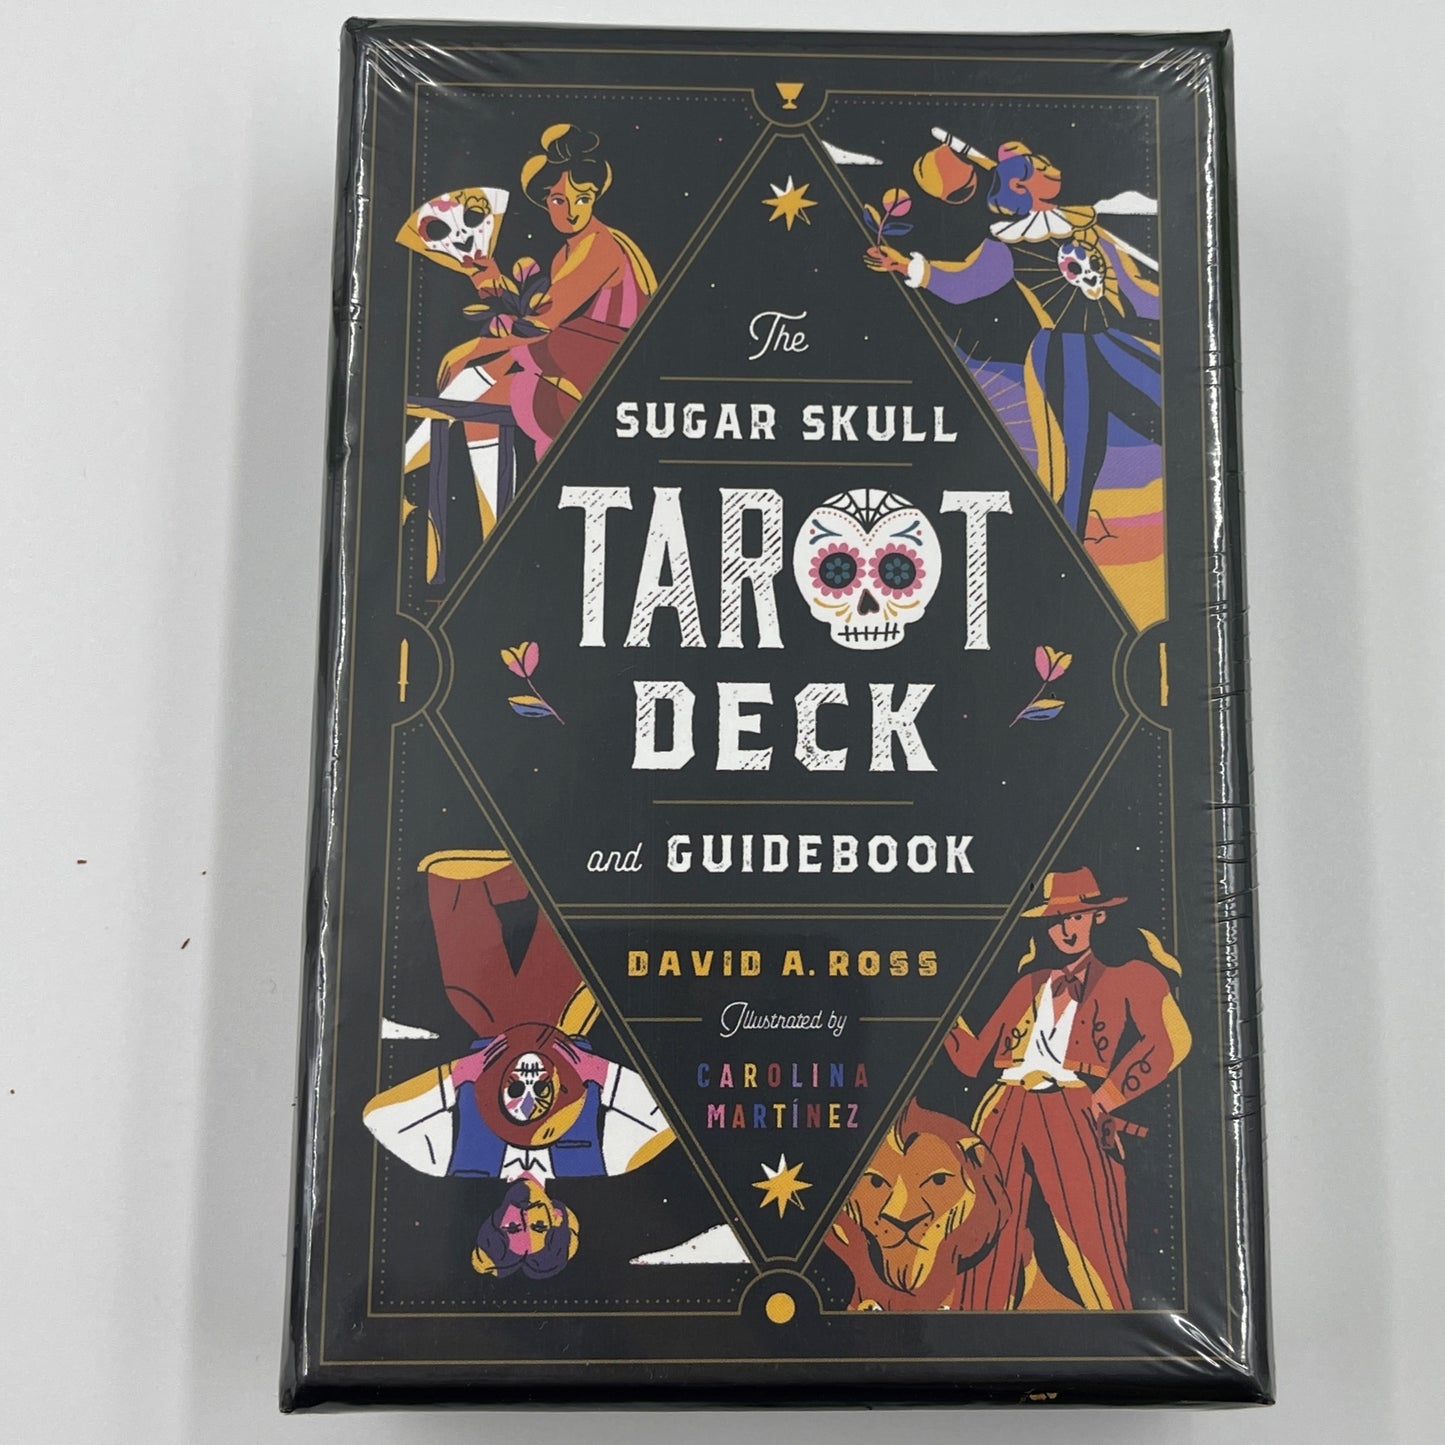 The Sugar Skull Tarot Deck & Guidebook